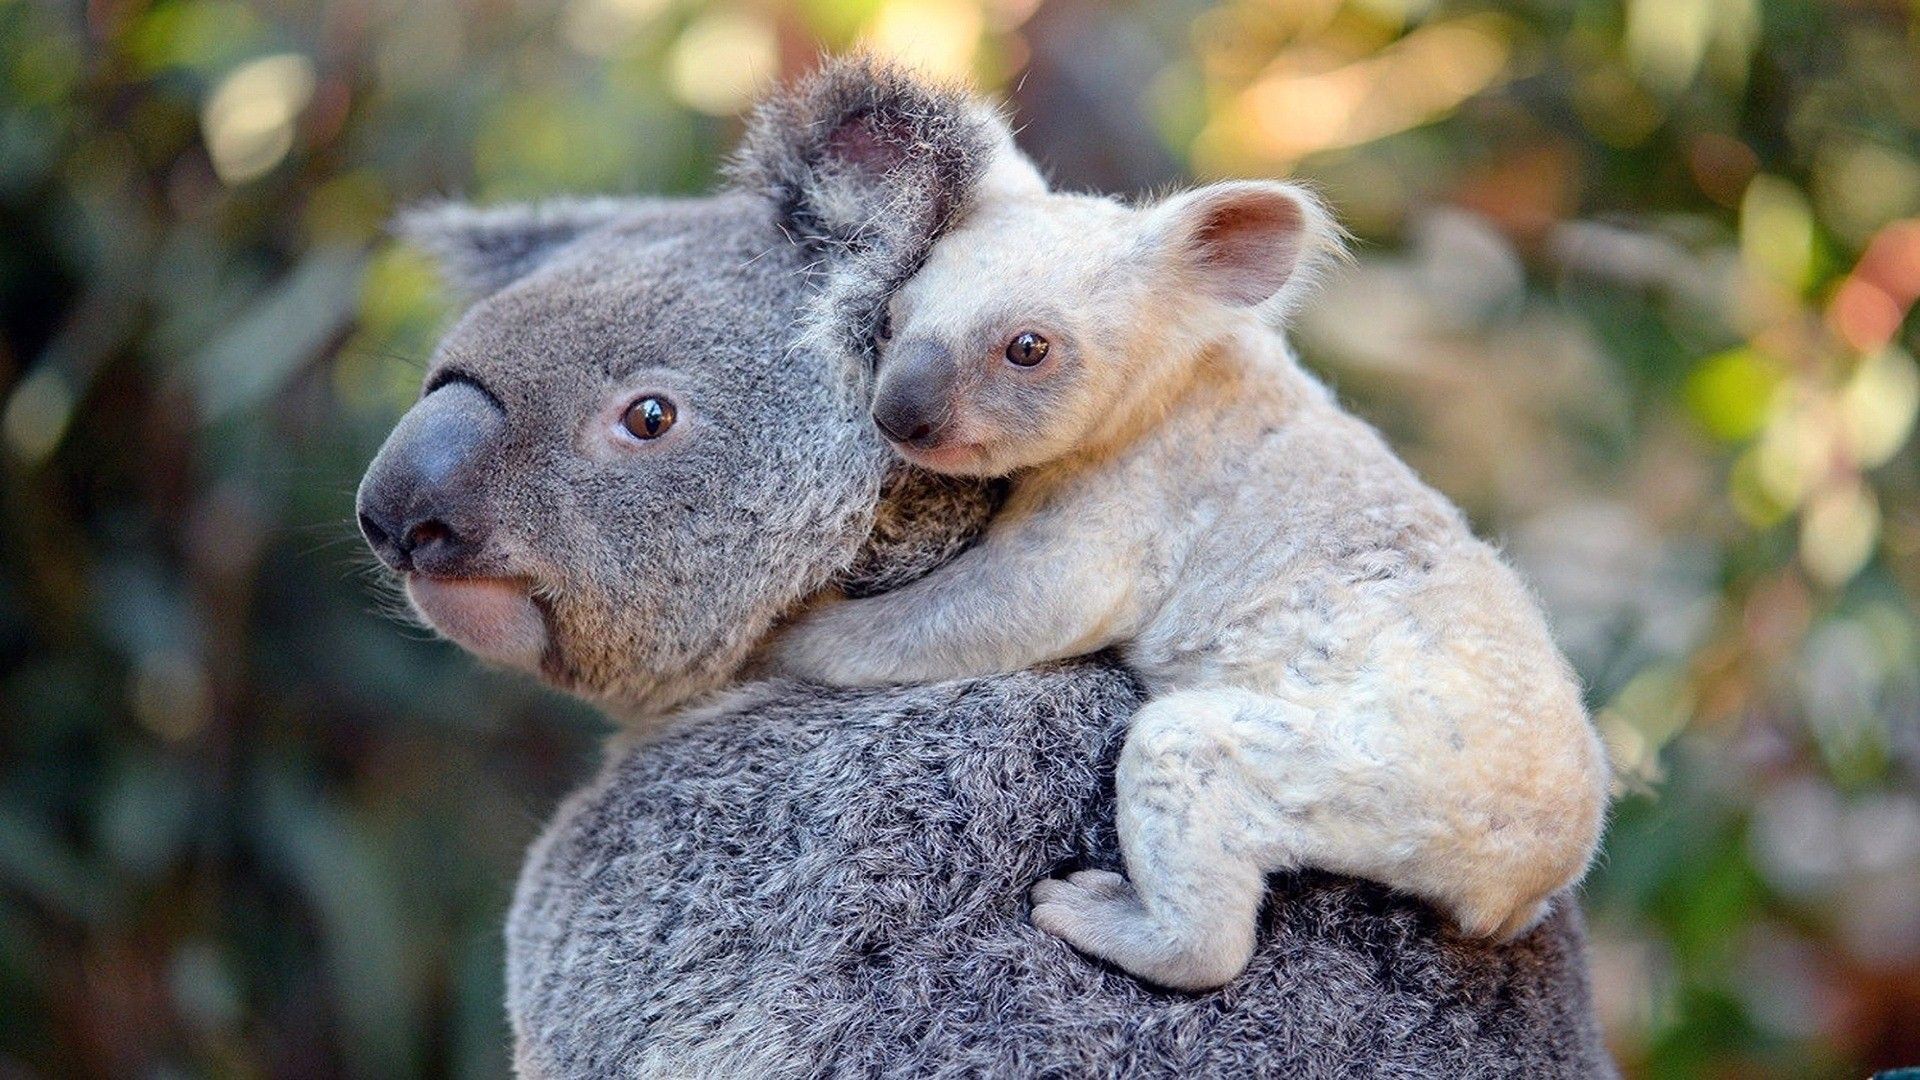 Cute White Child Baby Behind Mother Koala